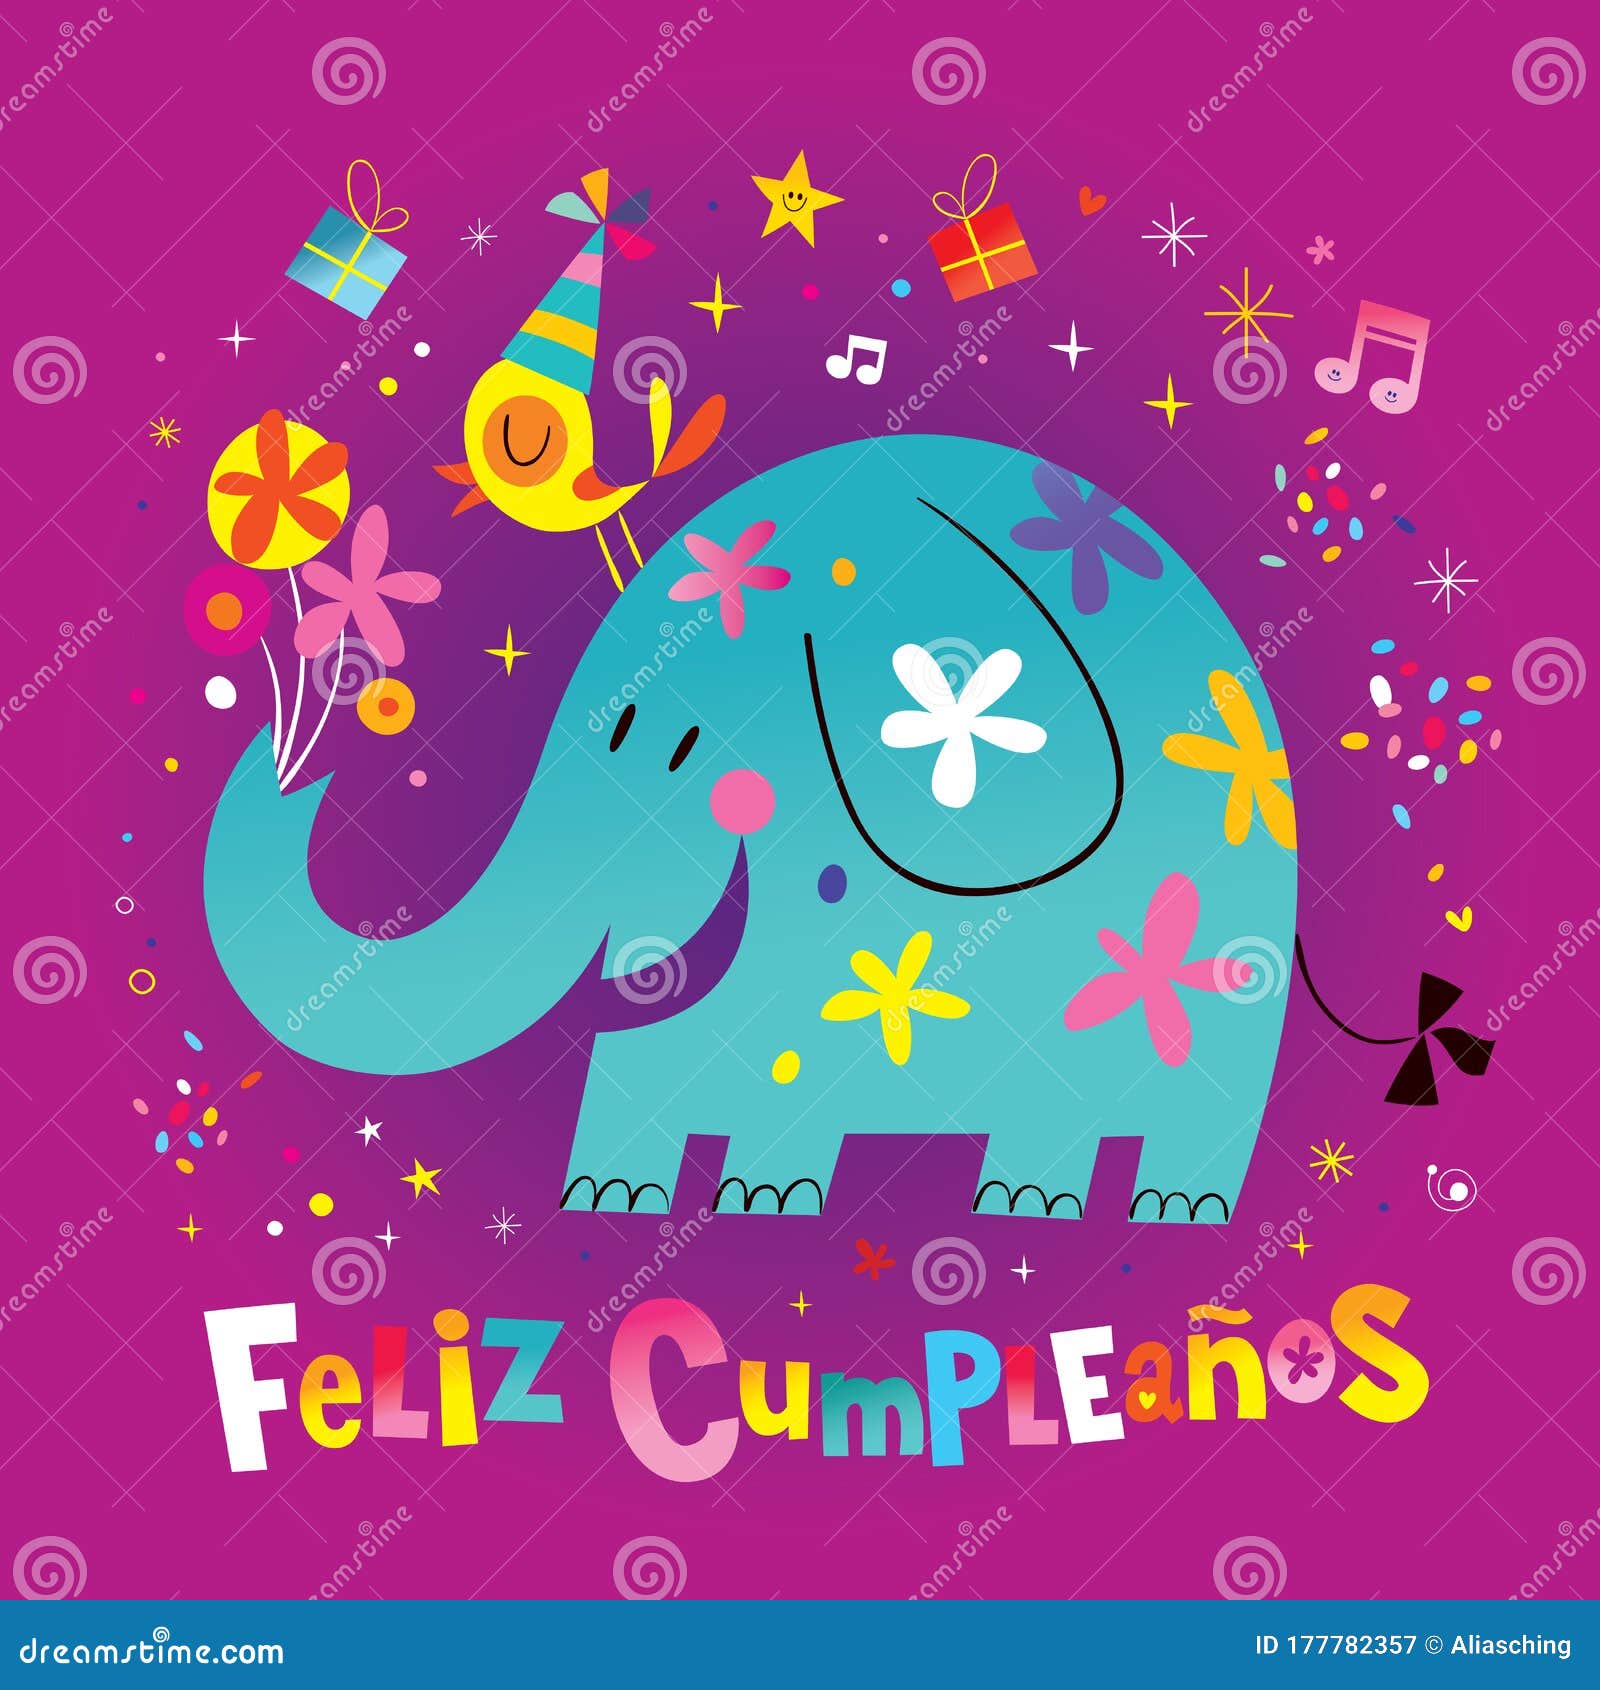 Feliz Cumpleanos Happy Birthday In Spanish Greeting Card